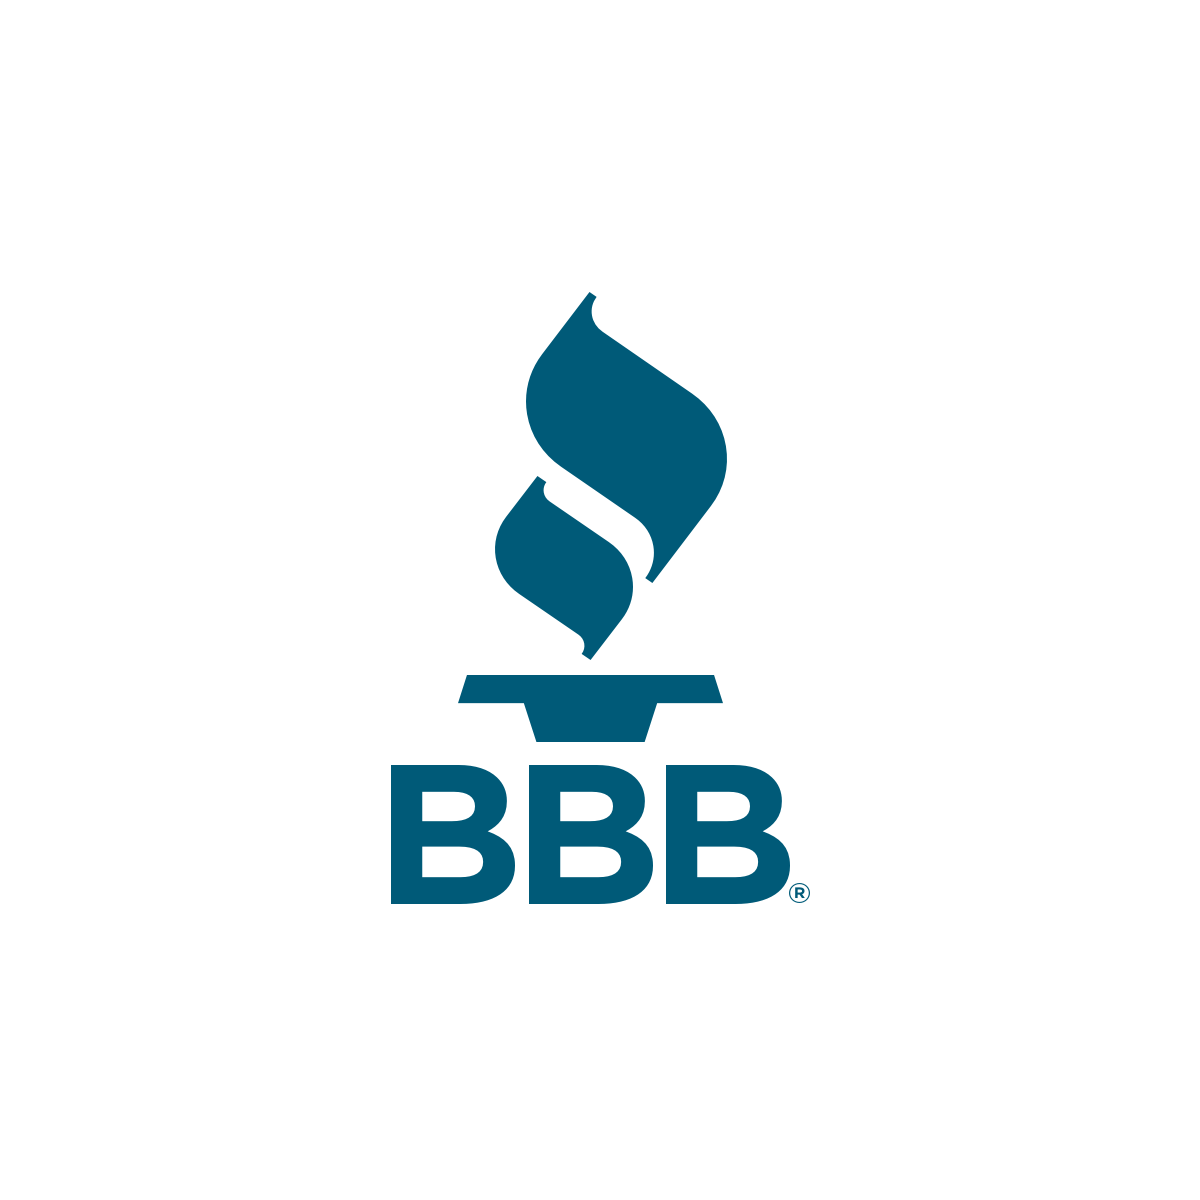 Mandataire du BBB (Better Business Bureau)